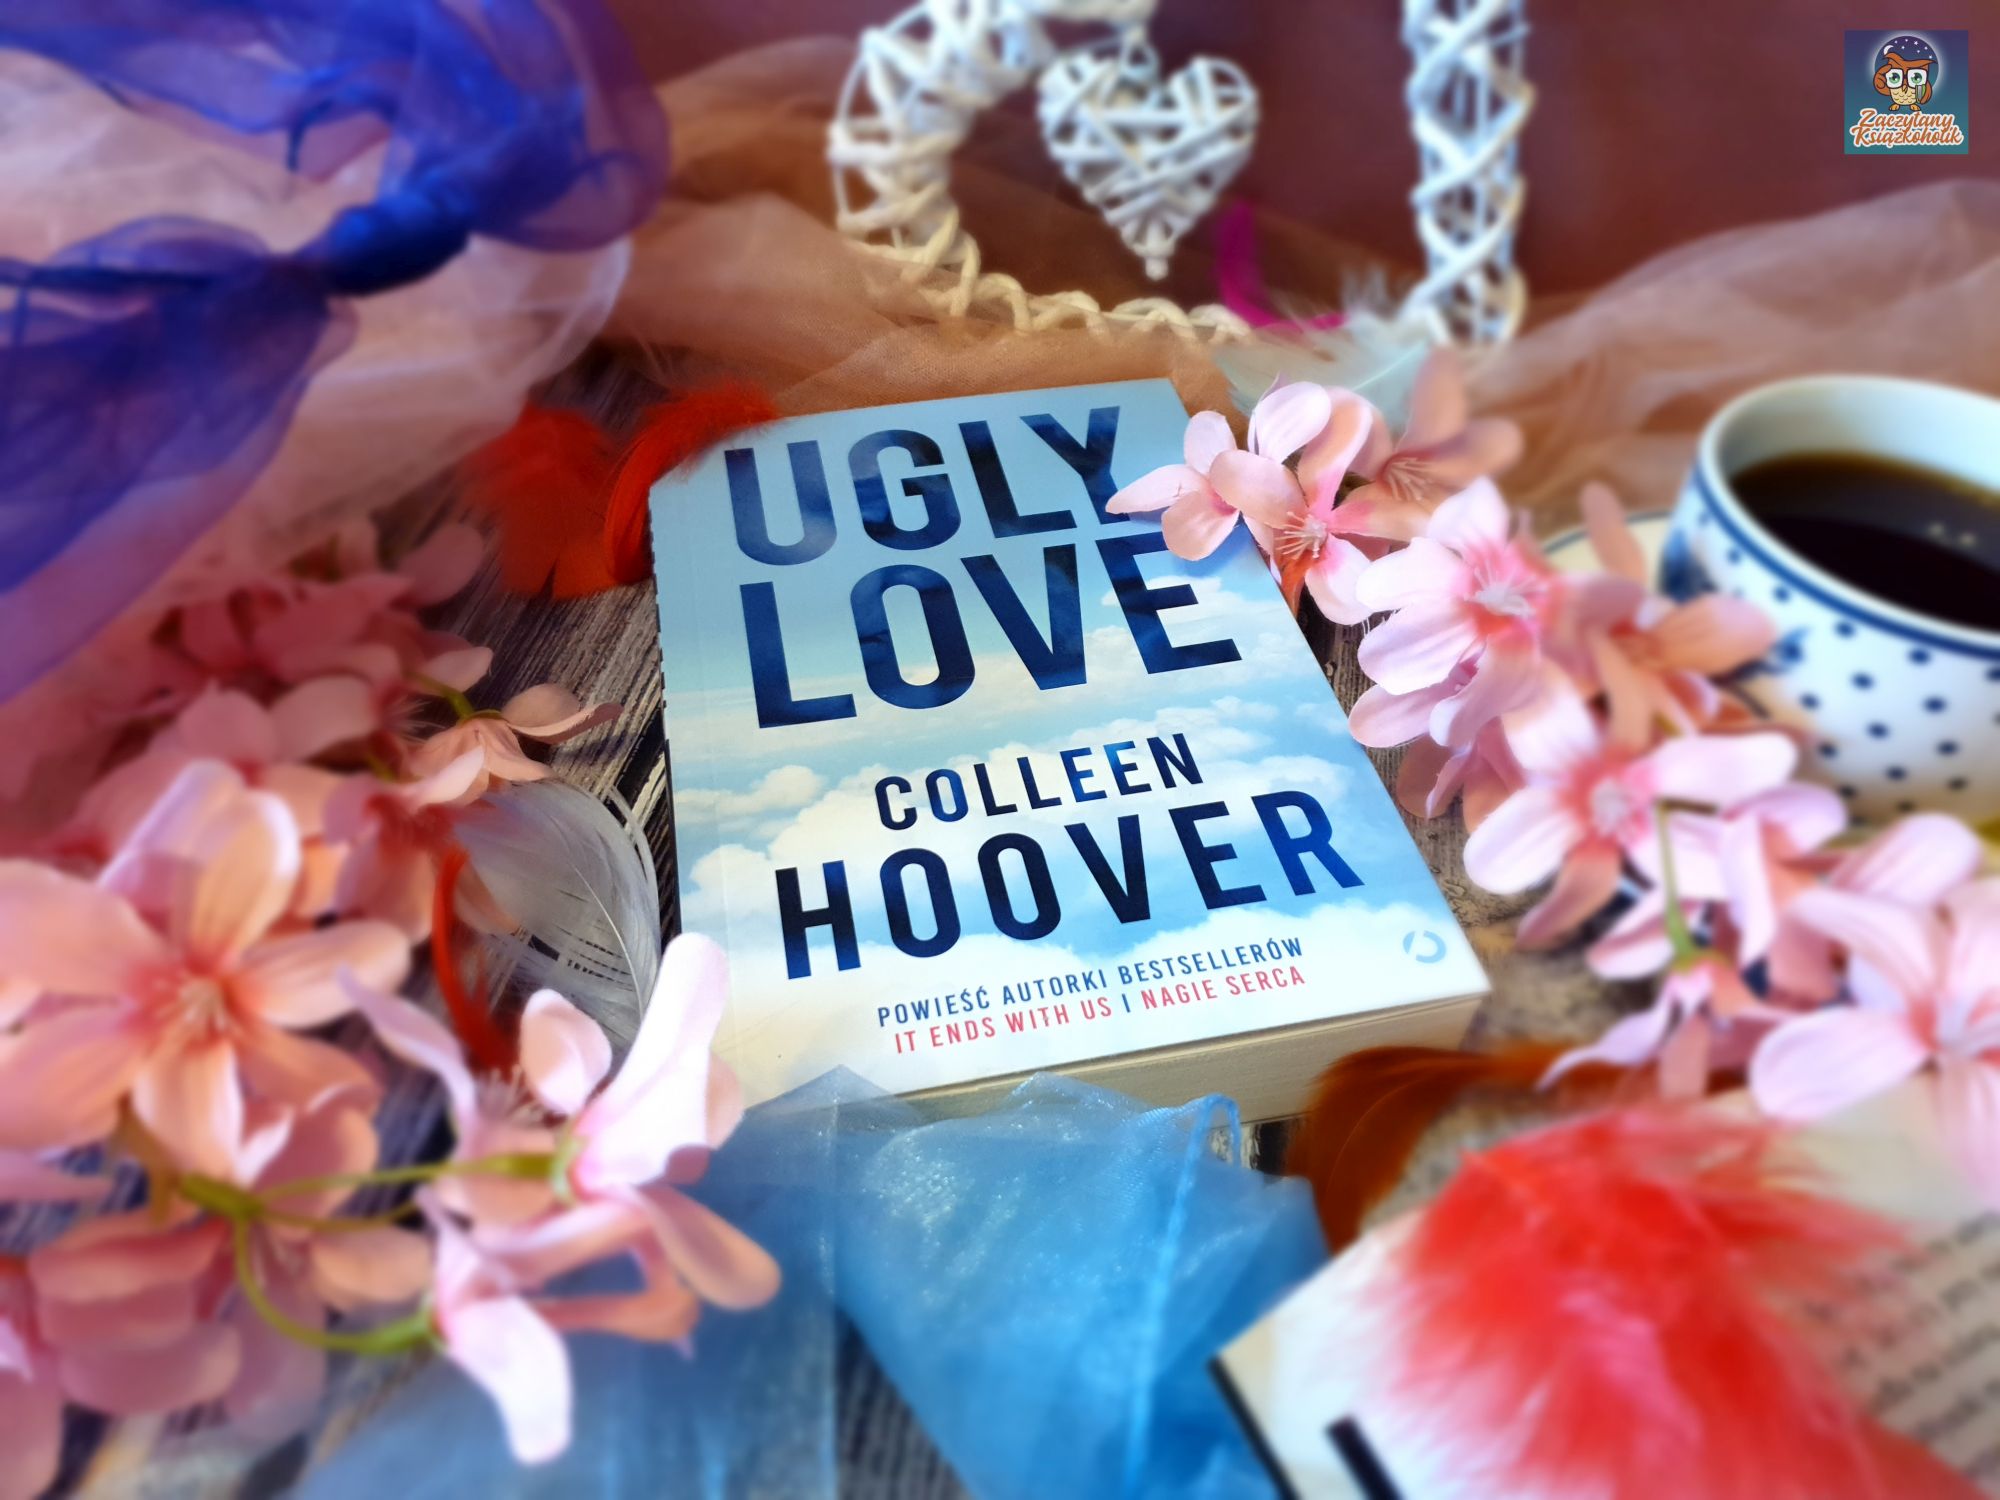 Ugly Love - Colleen Hoover - zaczytanyksiazkoholik.pl - blog